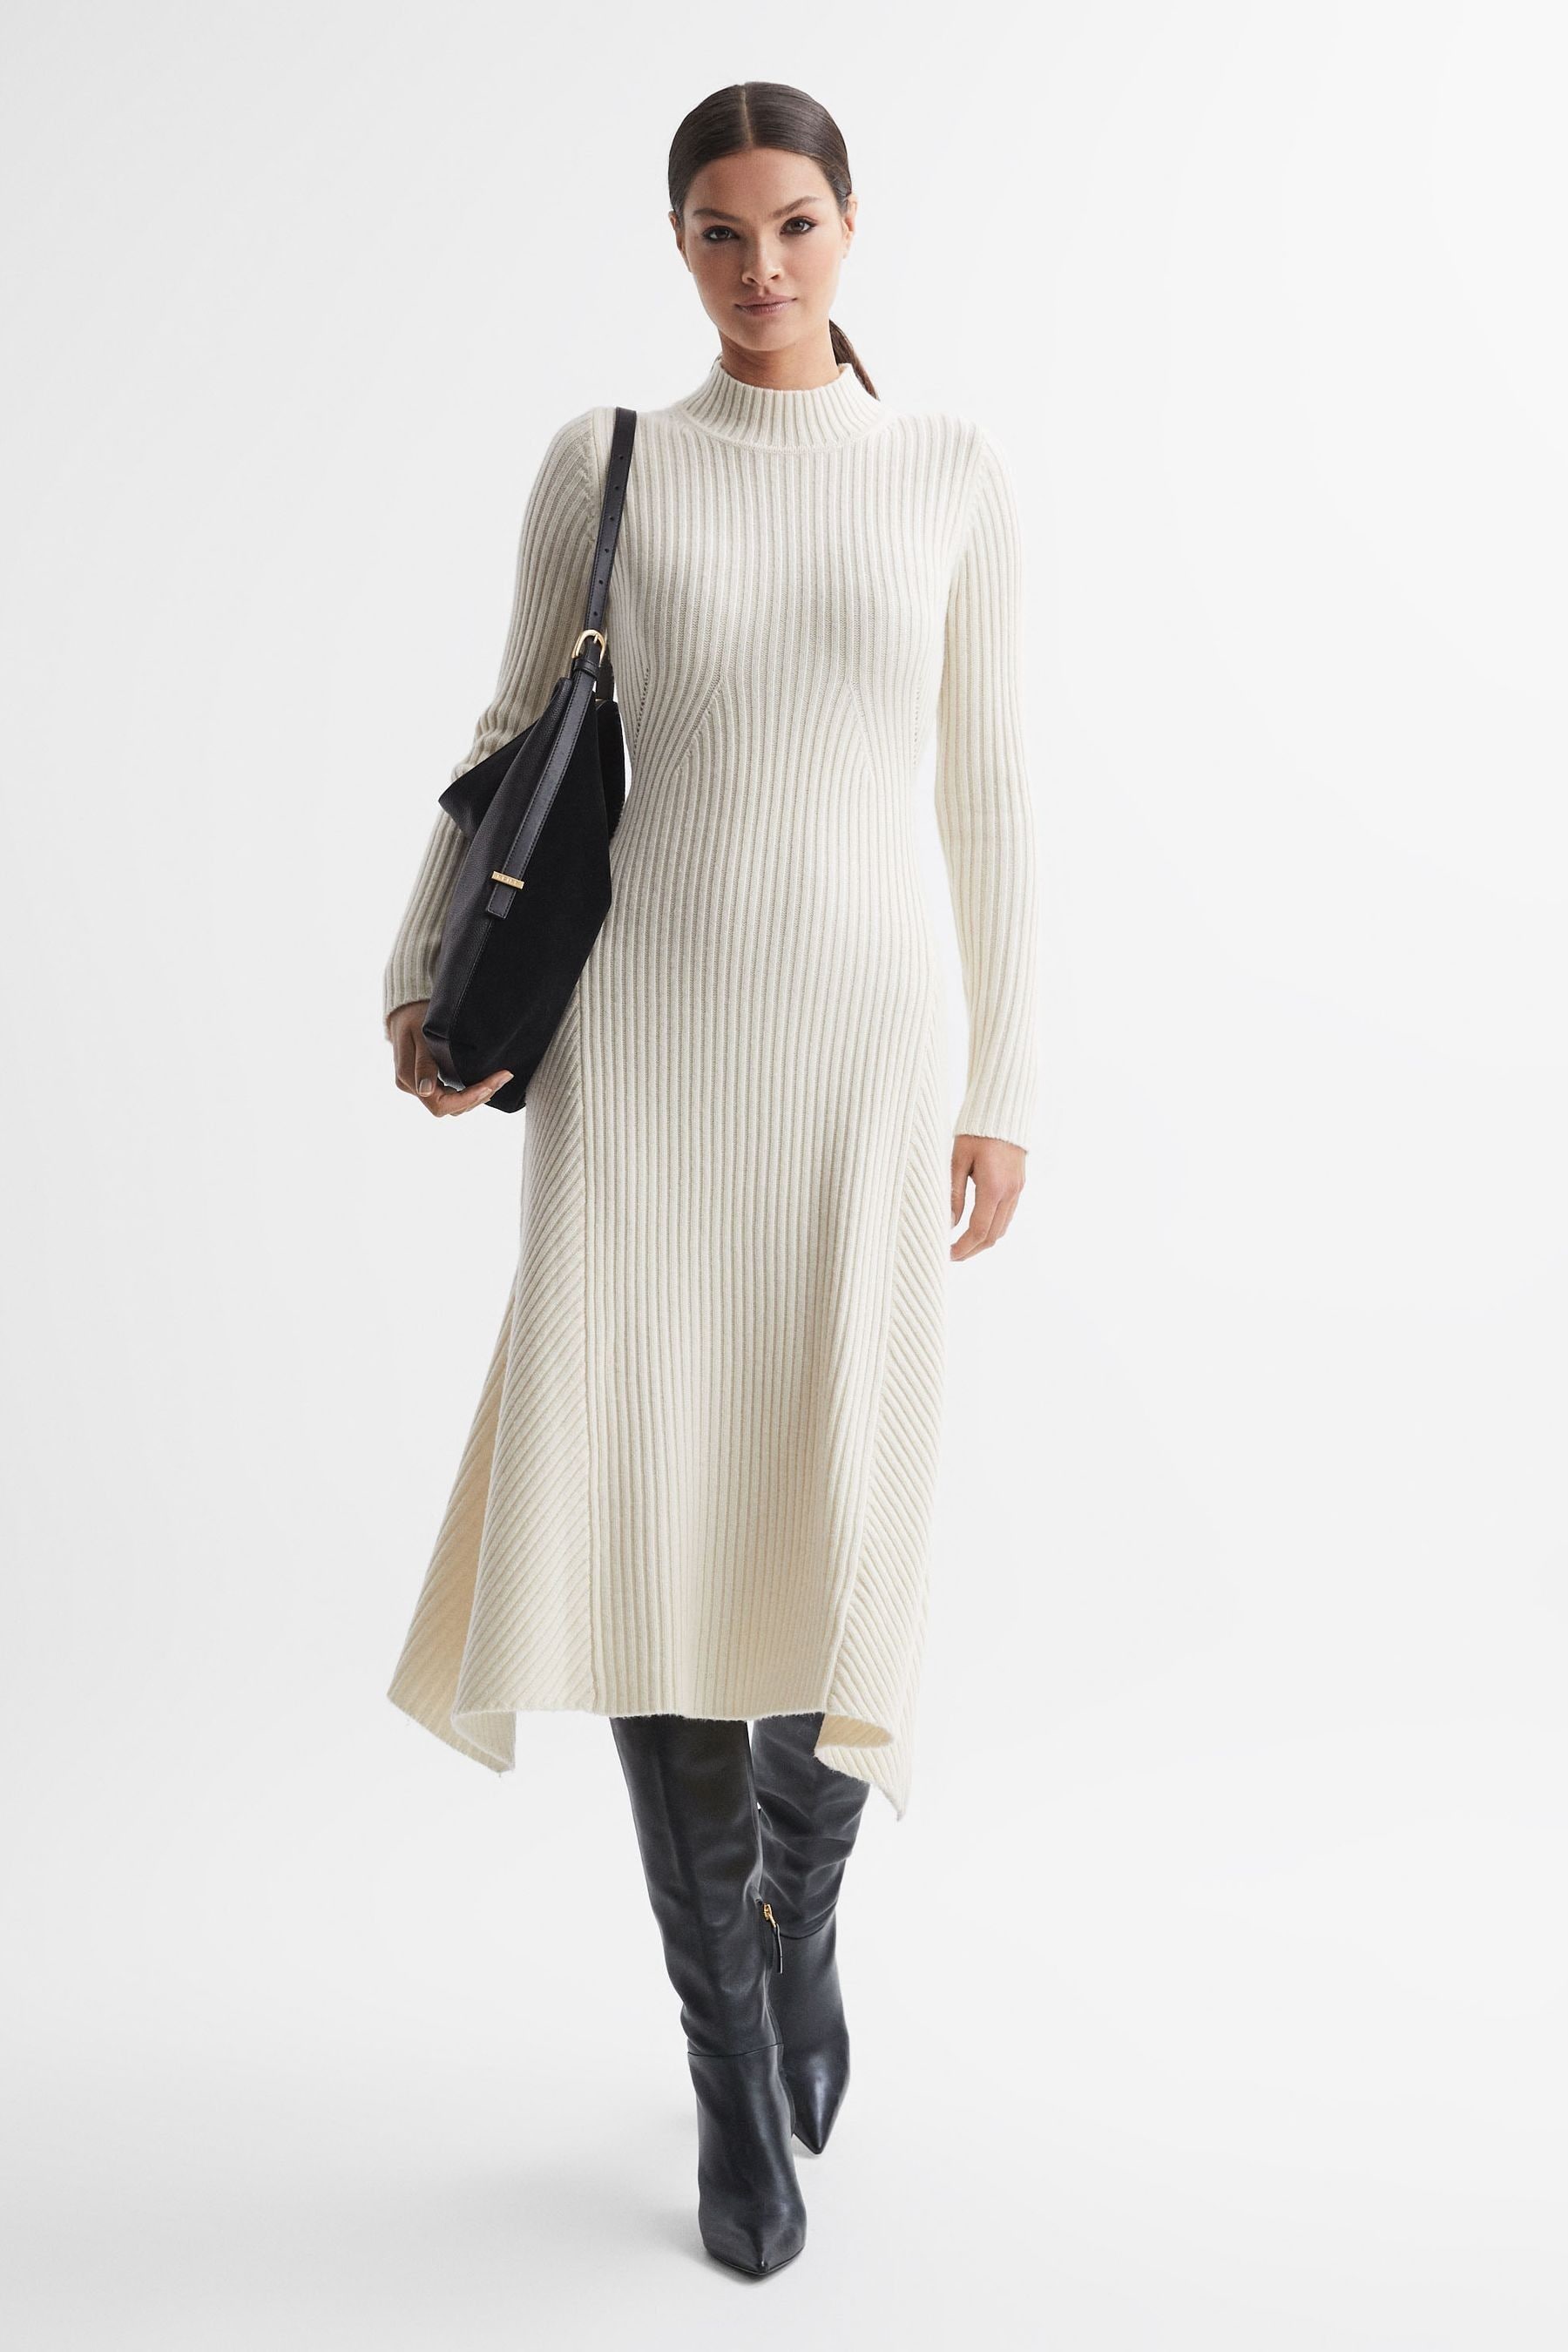 Reiss Kris - Cream Wool Blend Bodycon Midi Dress, M